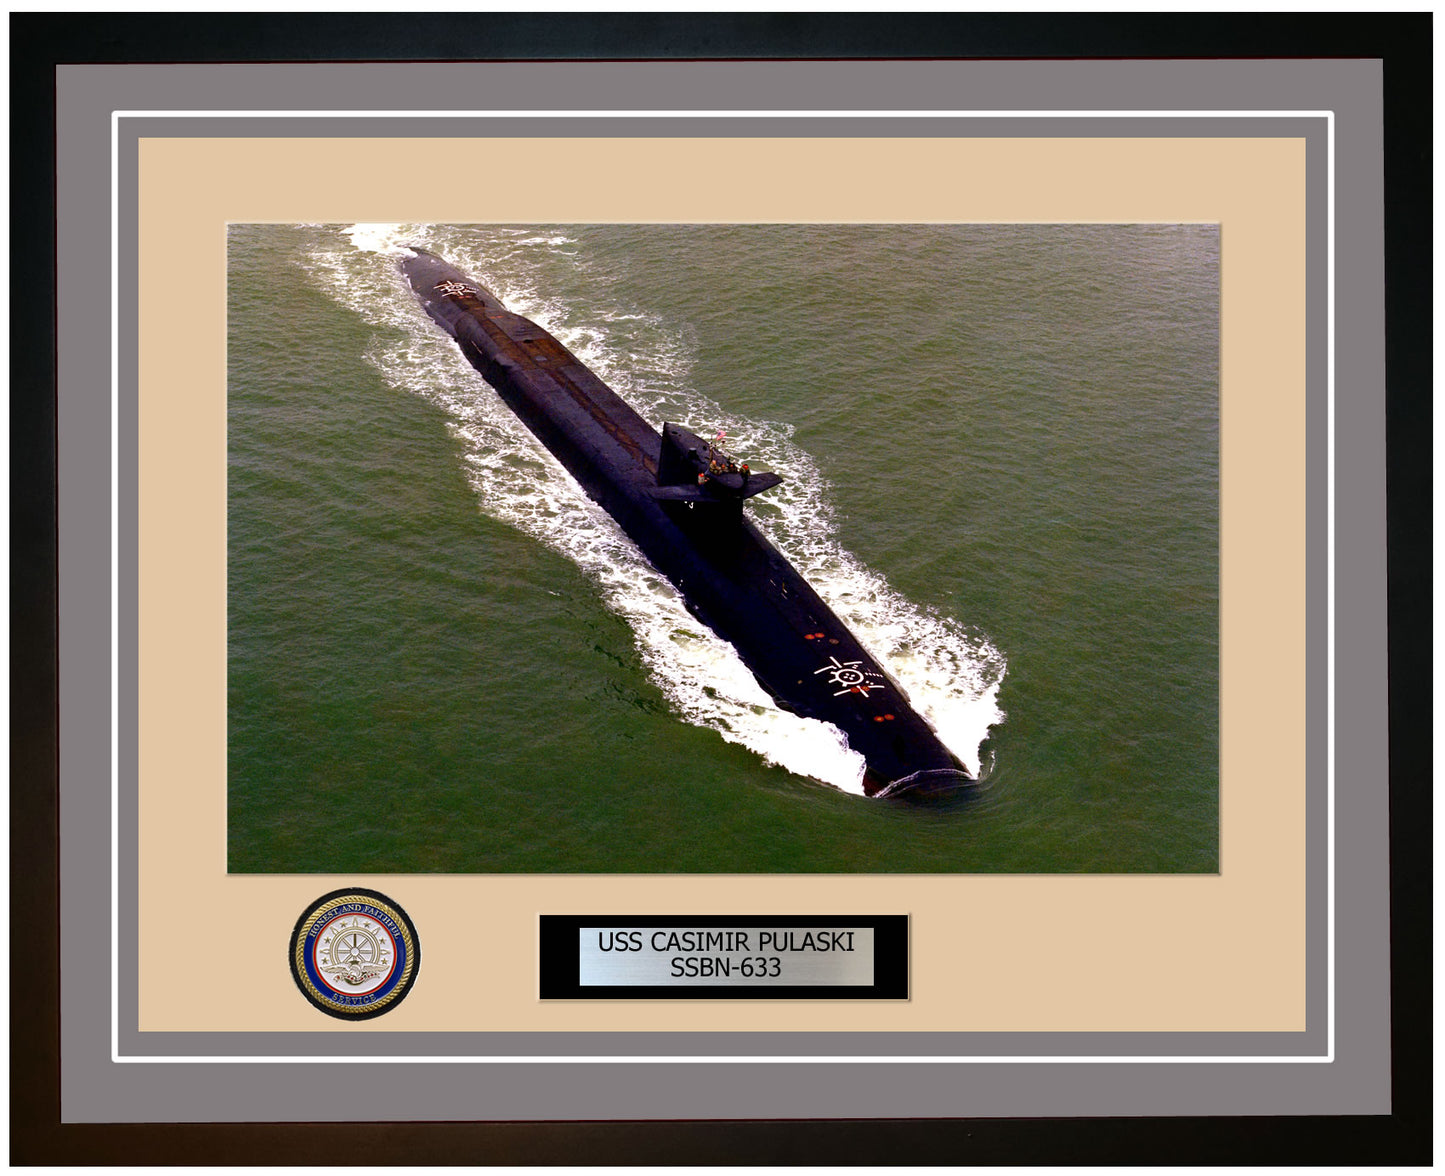 USS Casimir Pulaski SSBN-633 Framed Navy Ship Photo Grey